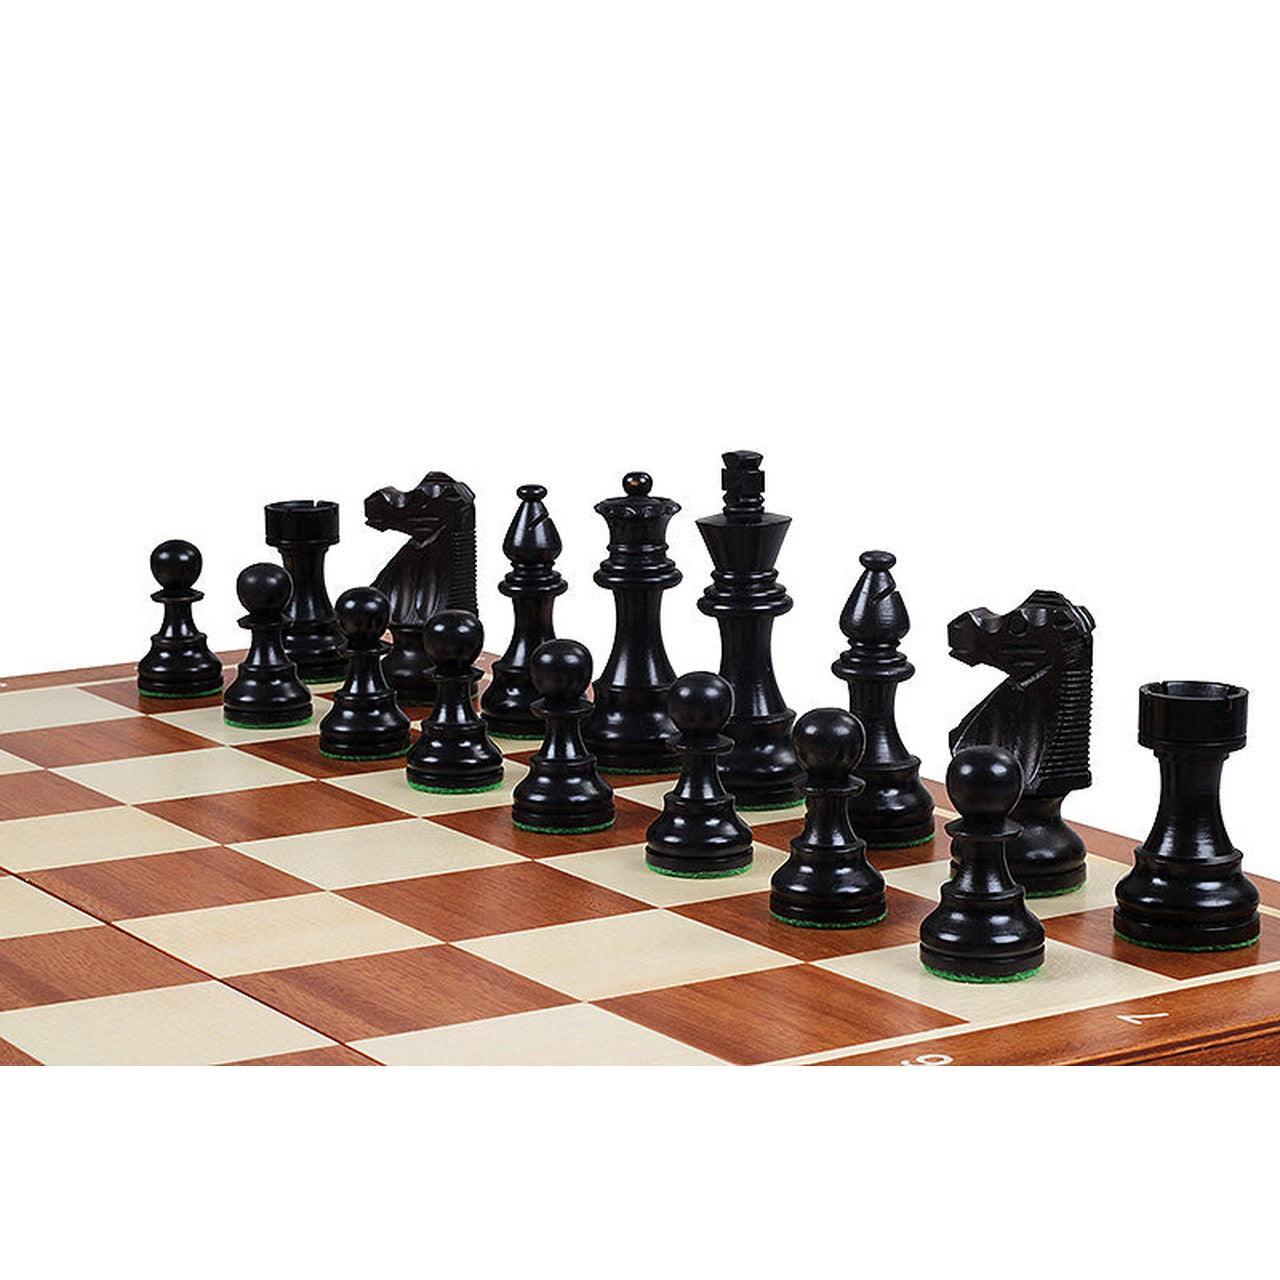 FRENCH STAUNTON BLACK Chess Set